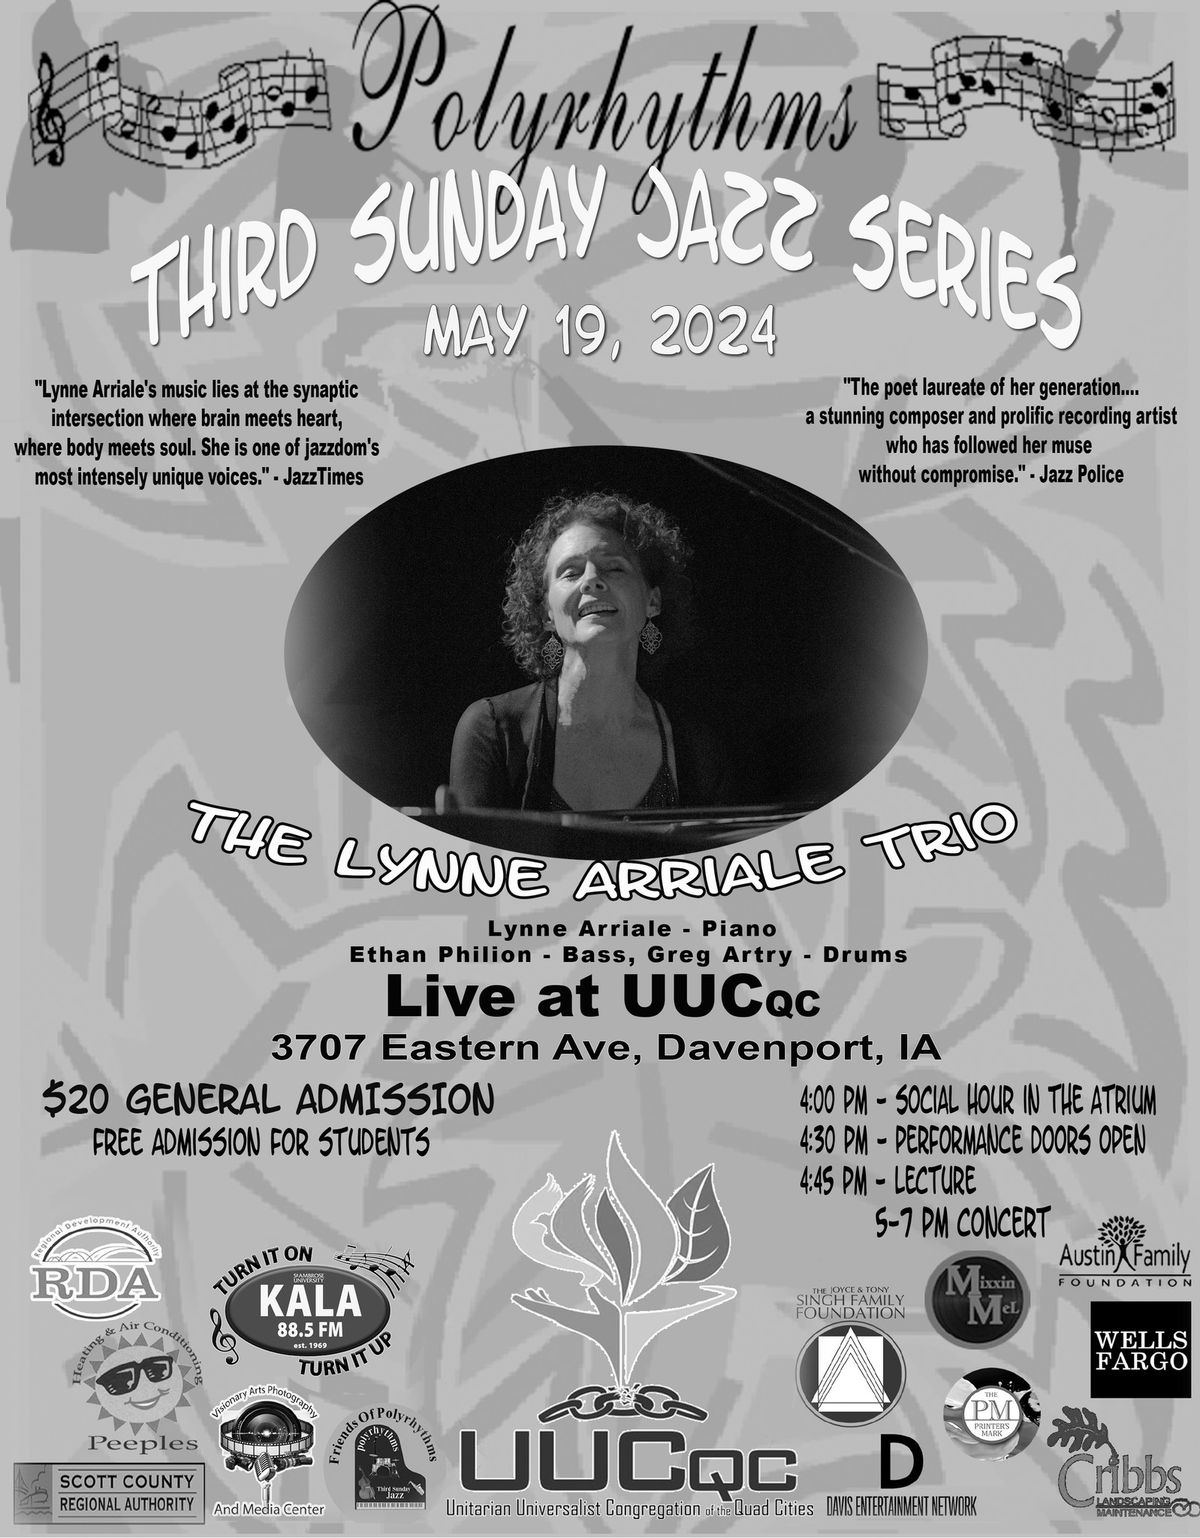 POLYRHYTHMS Third Sunday Jazz Series presents the LYNNE ARRIALE TRIO